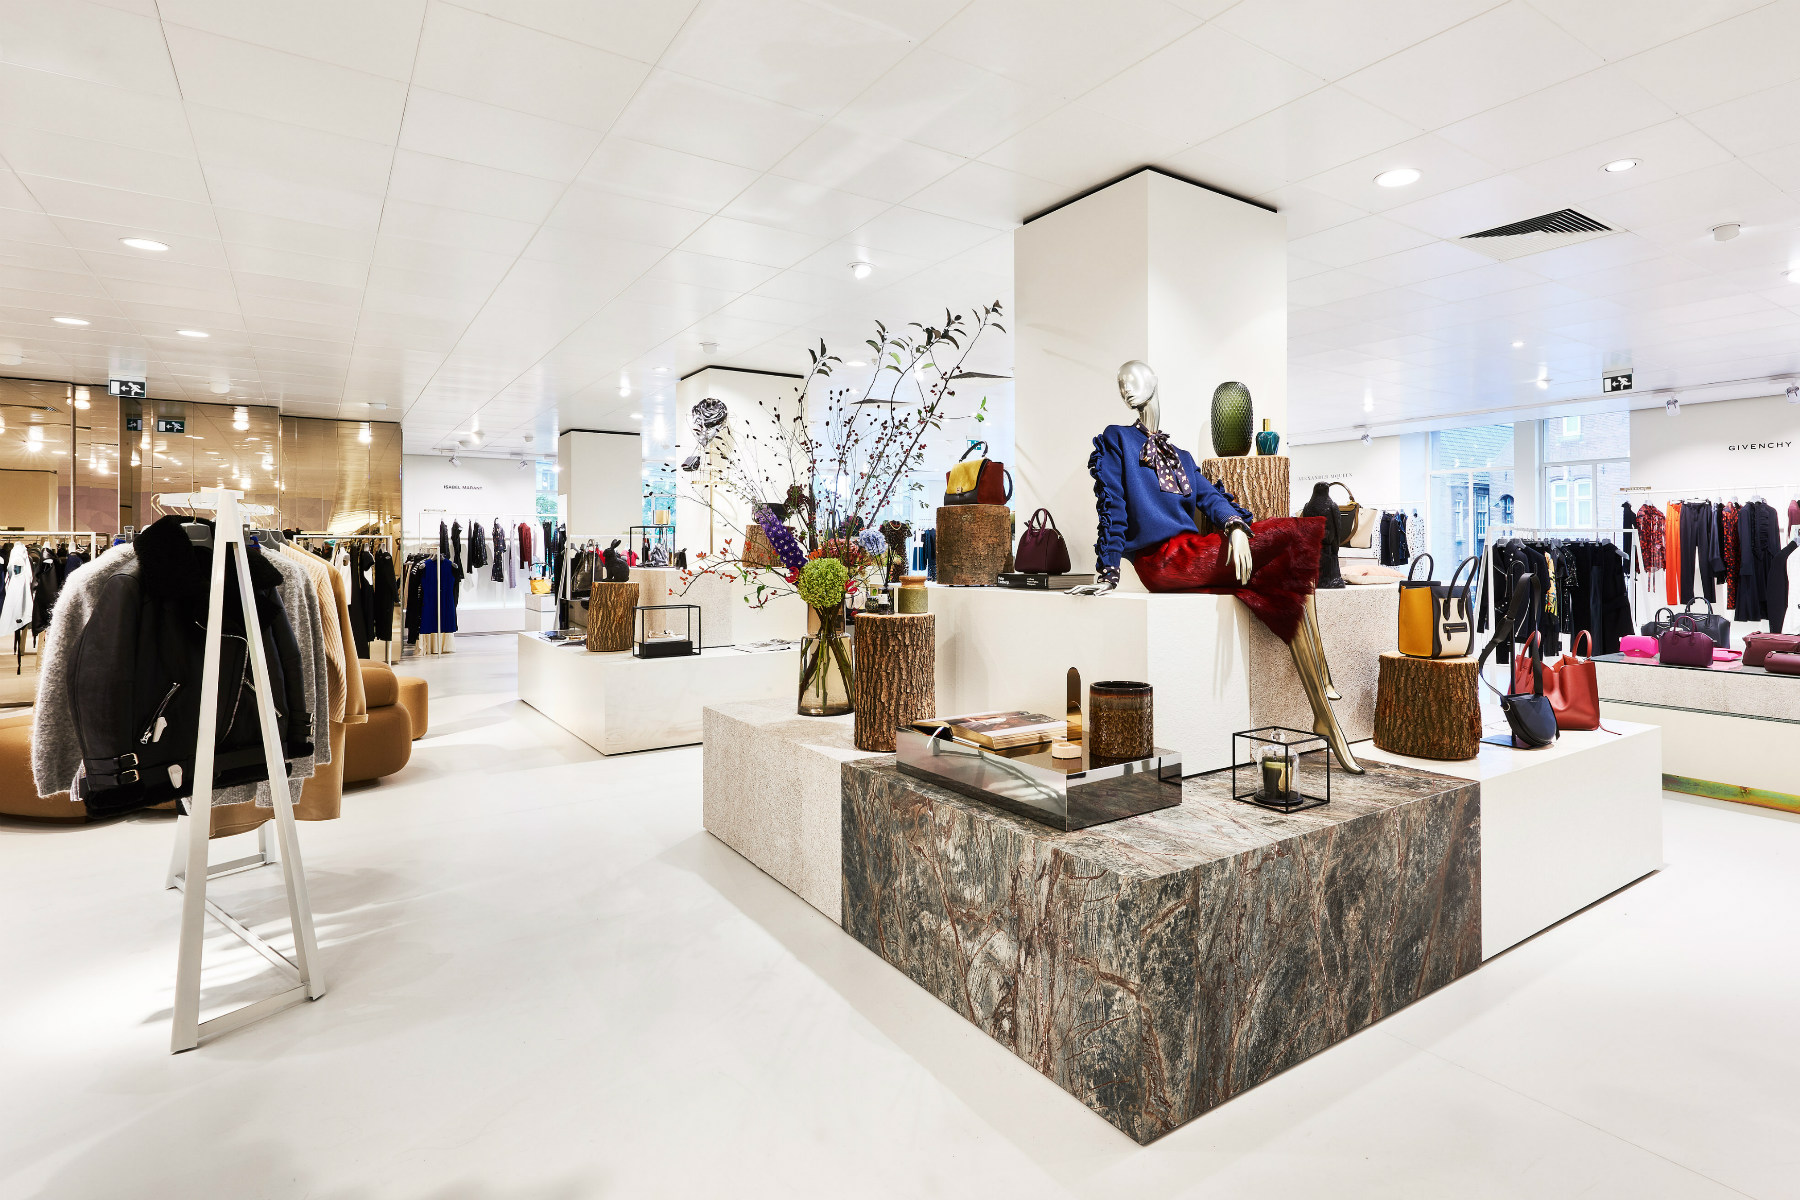 Louis Vuitton Amsterdam Bijenkorf store, Netherlands